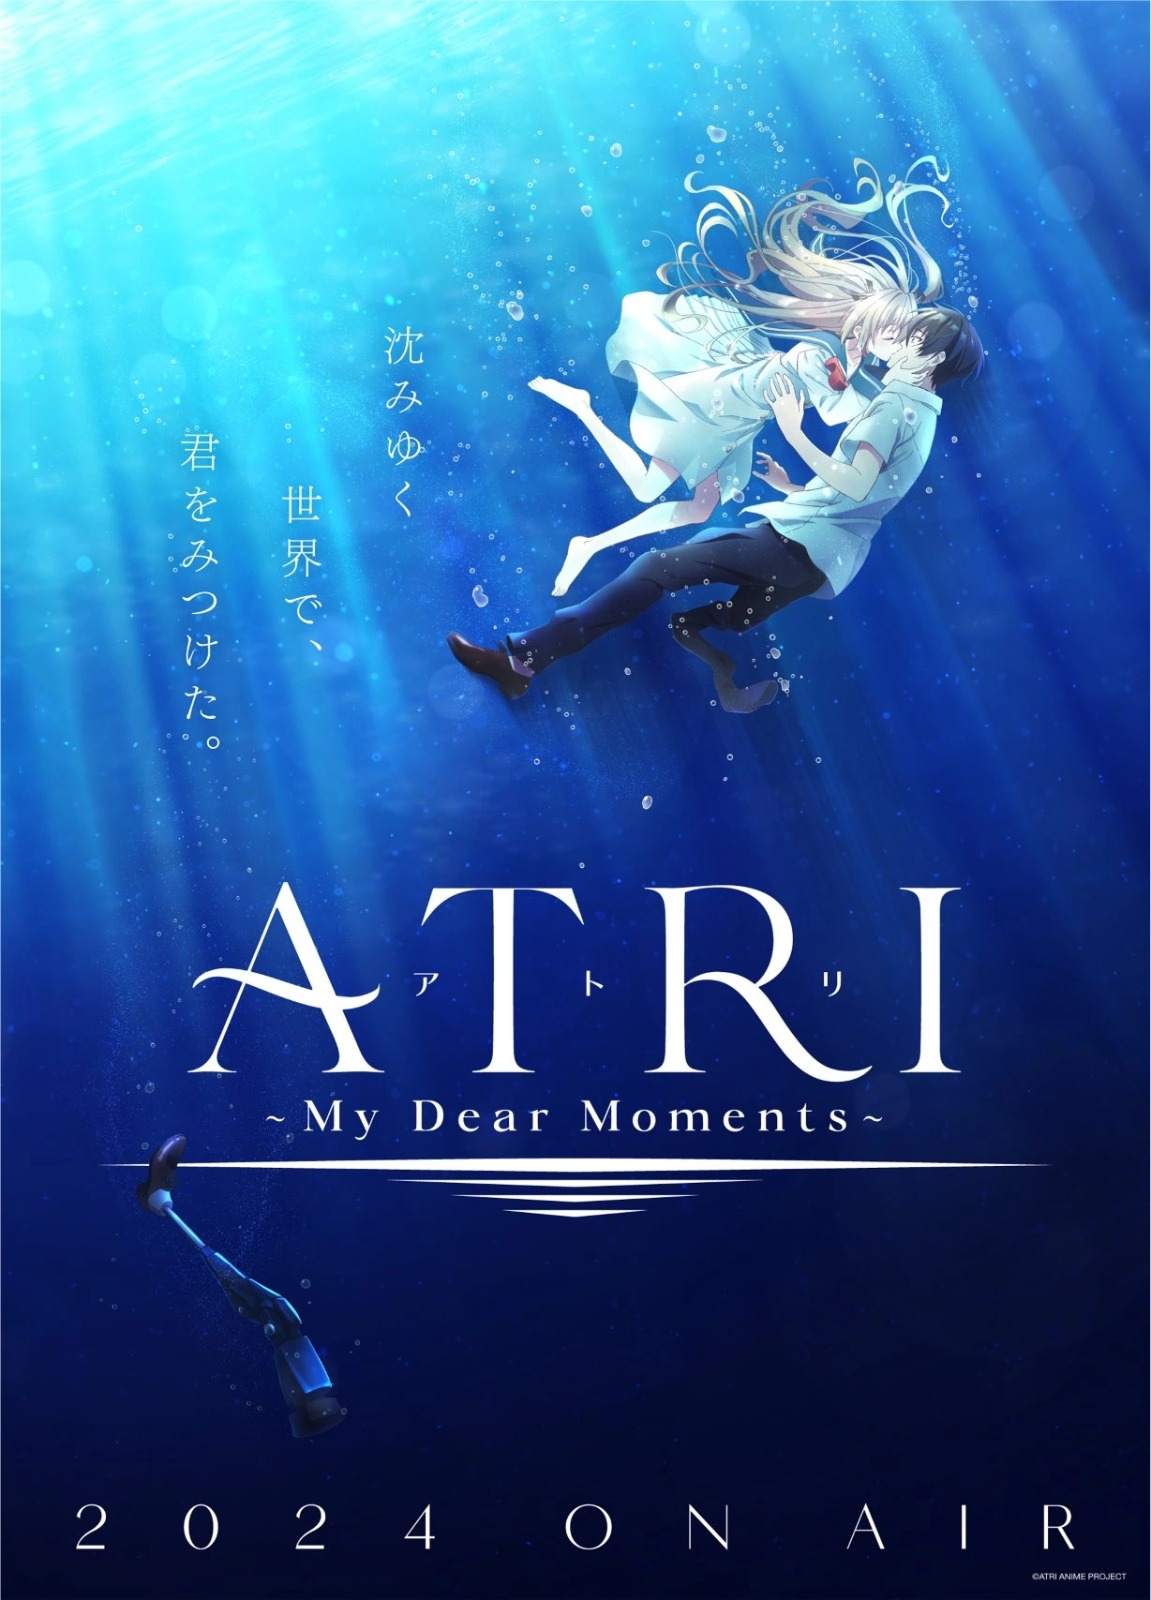  Atri: My Dear Moments cover